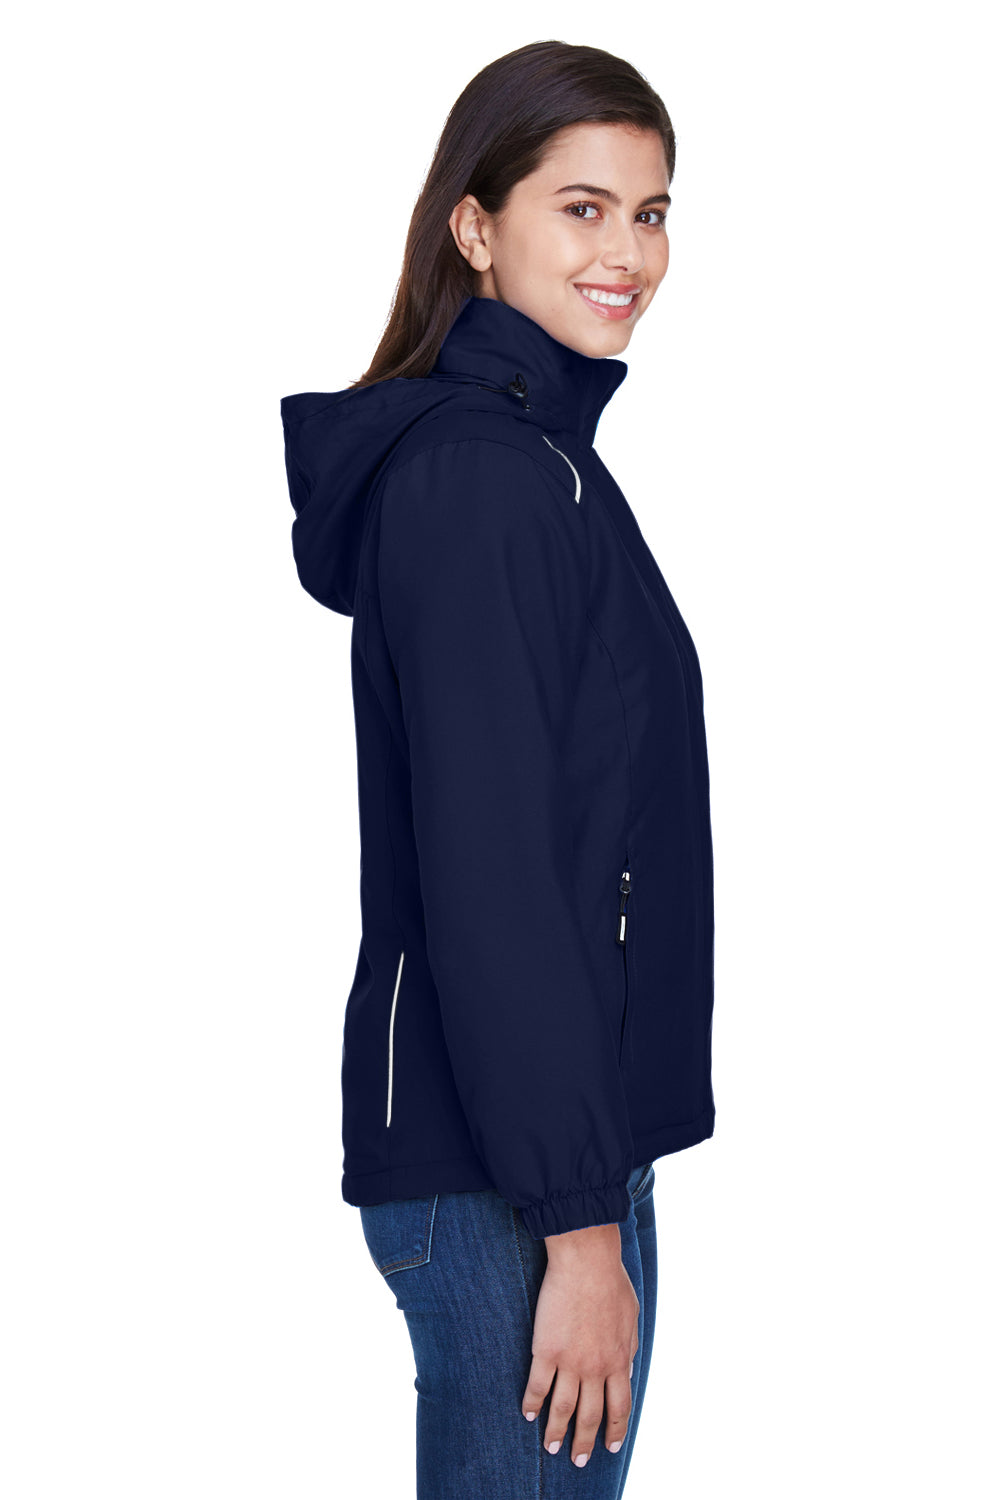 Core 365 78189 Womens Brisk Full Zip Hooded Jacket Navy Blue Side